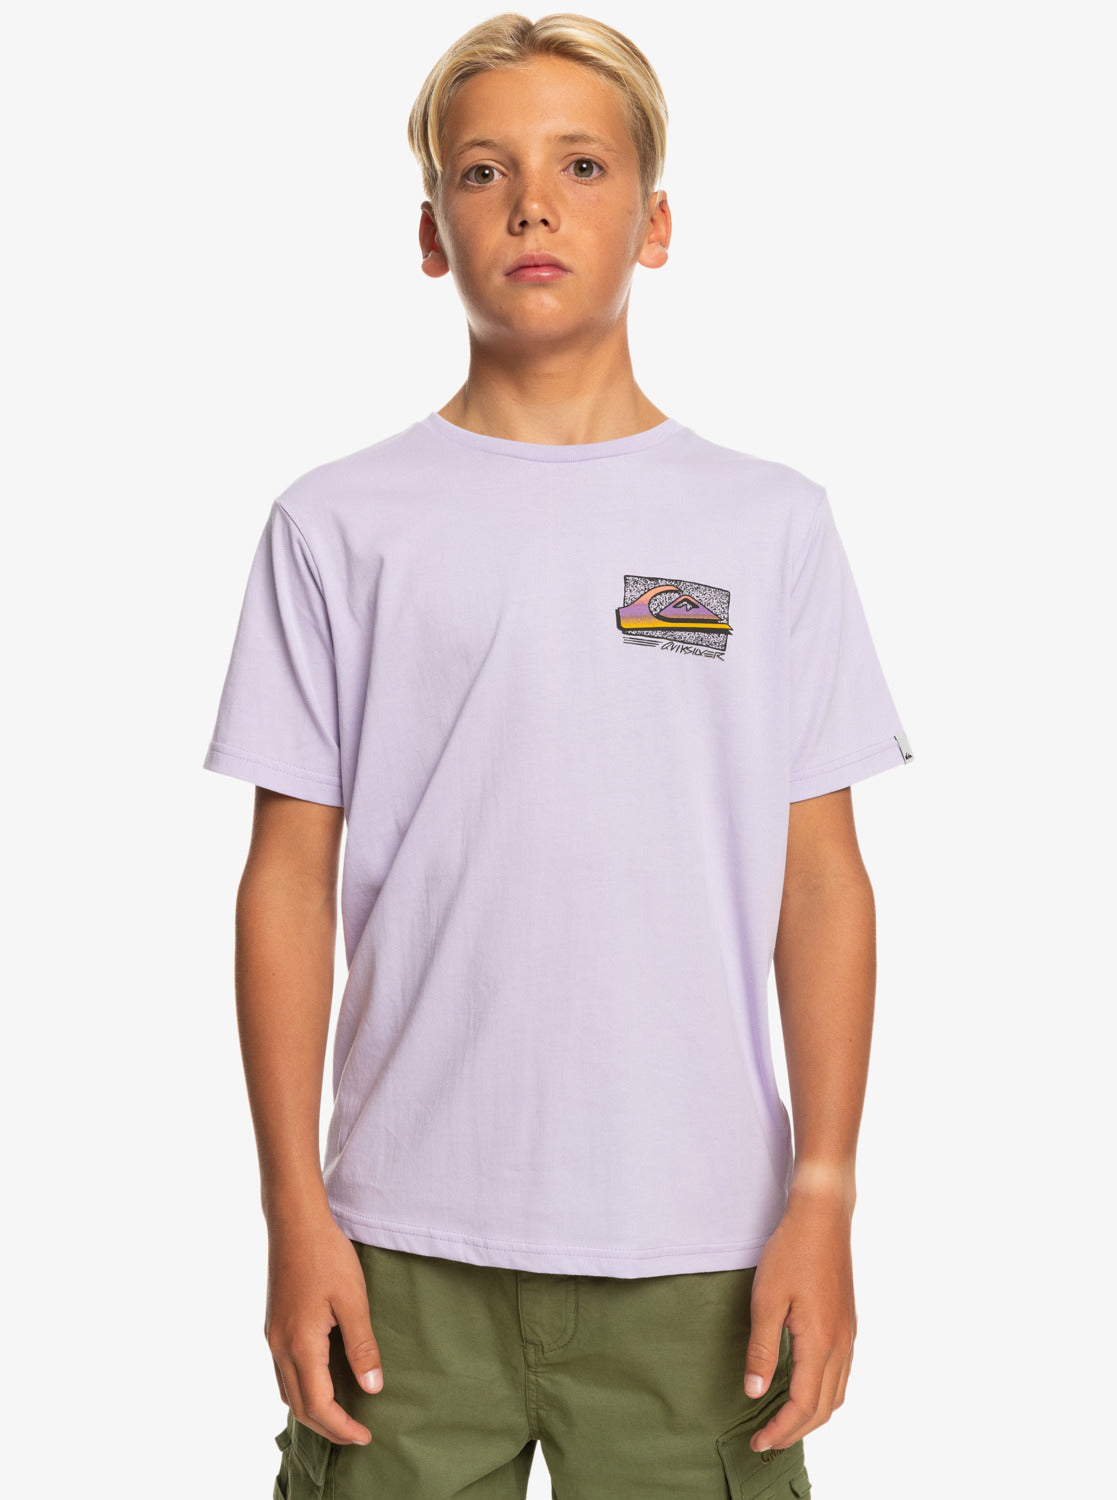 Quiksilver Retro Fade Boys T-Shirt in Pastel Lilac